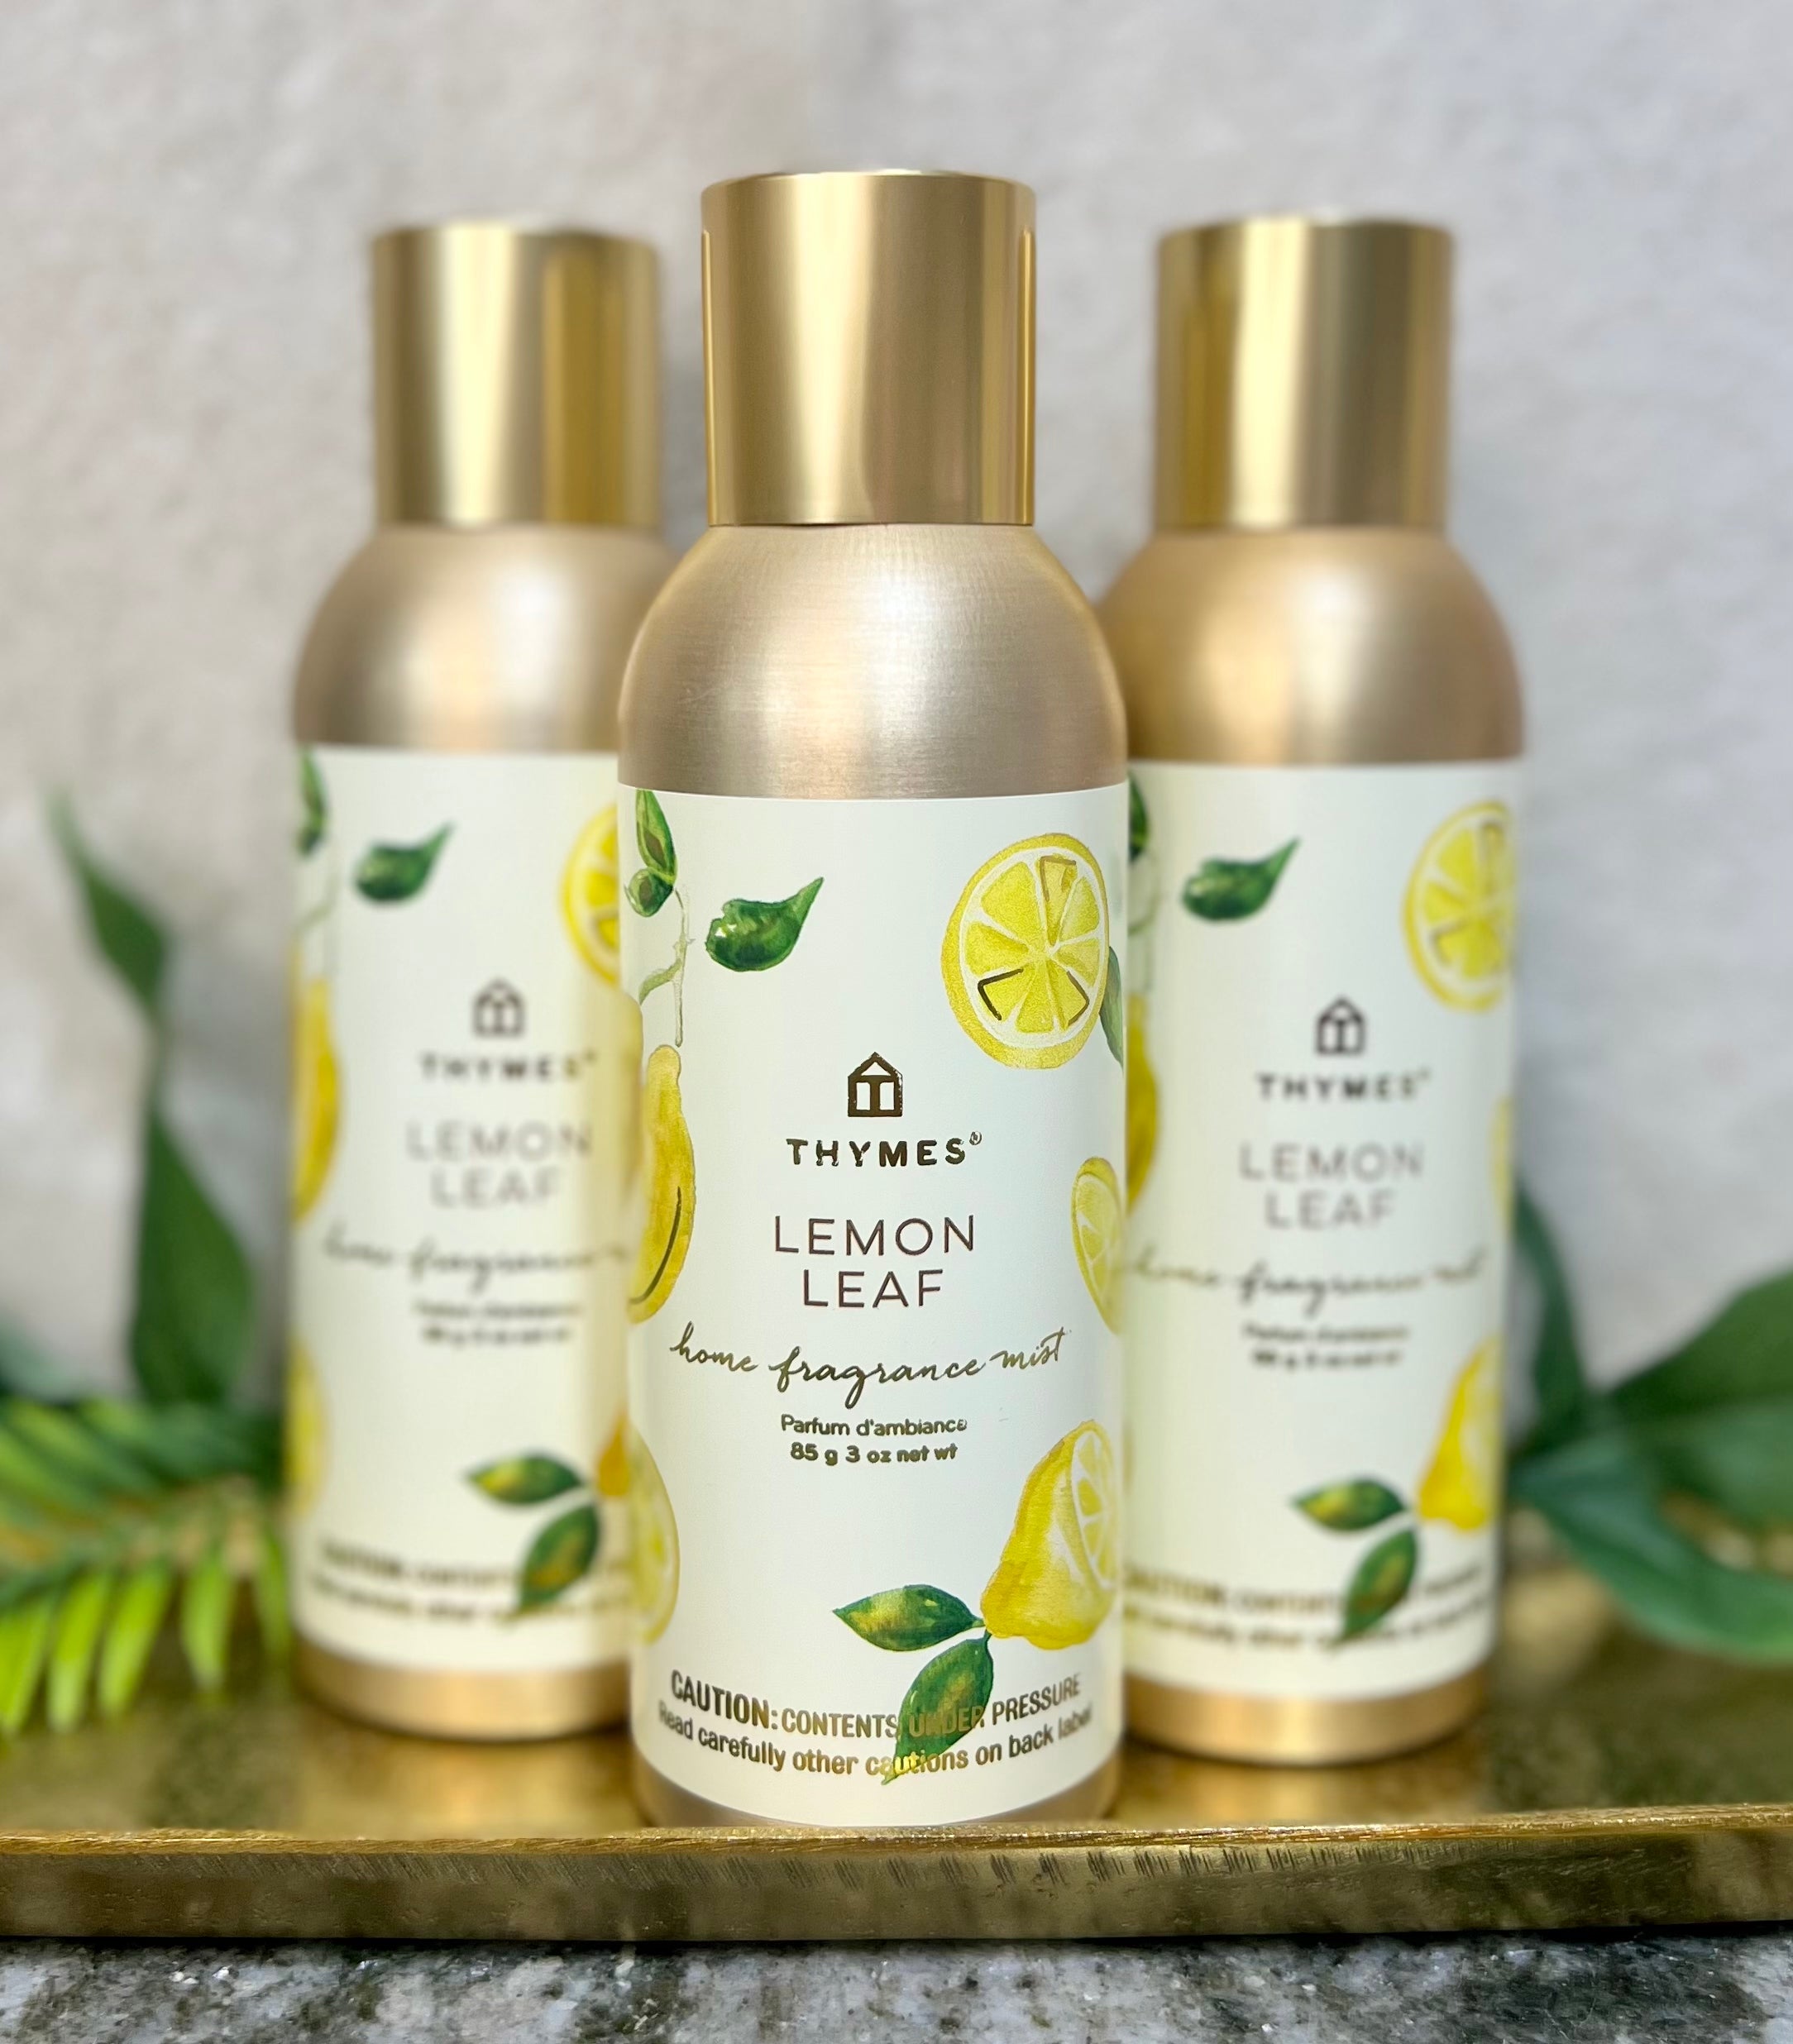 Thymes “Lemon Leaf” fragrance mist